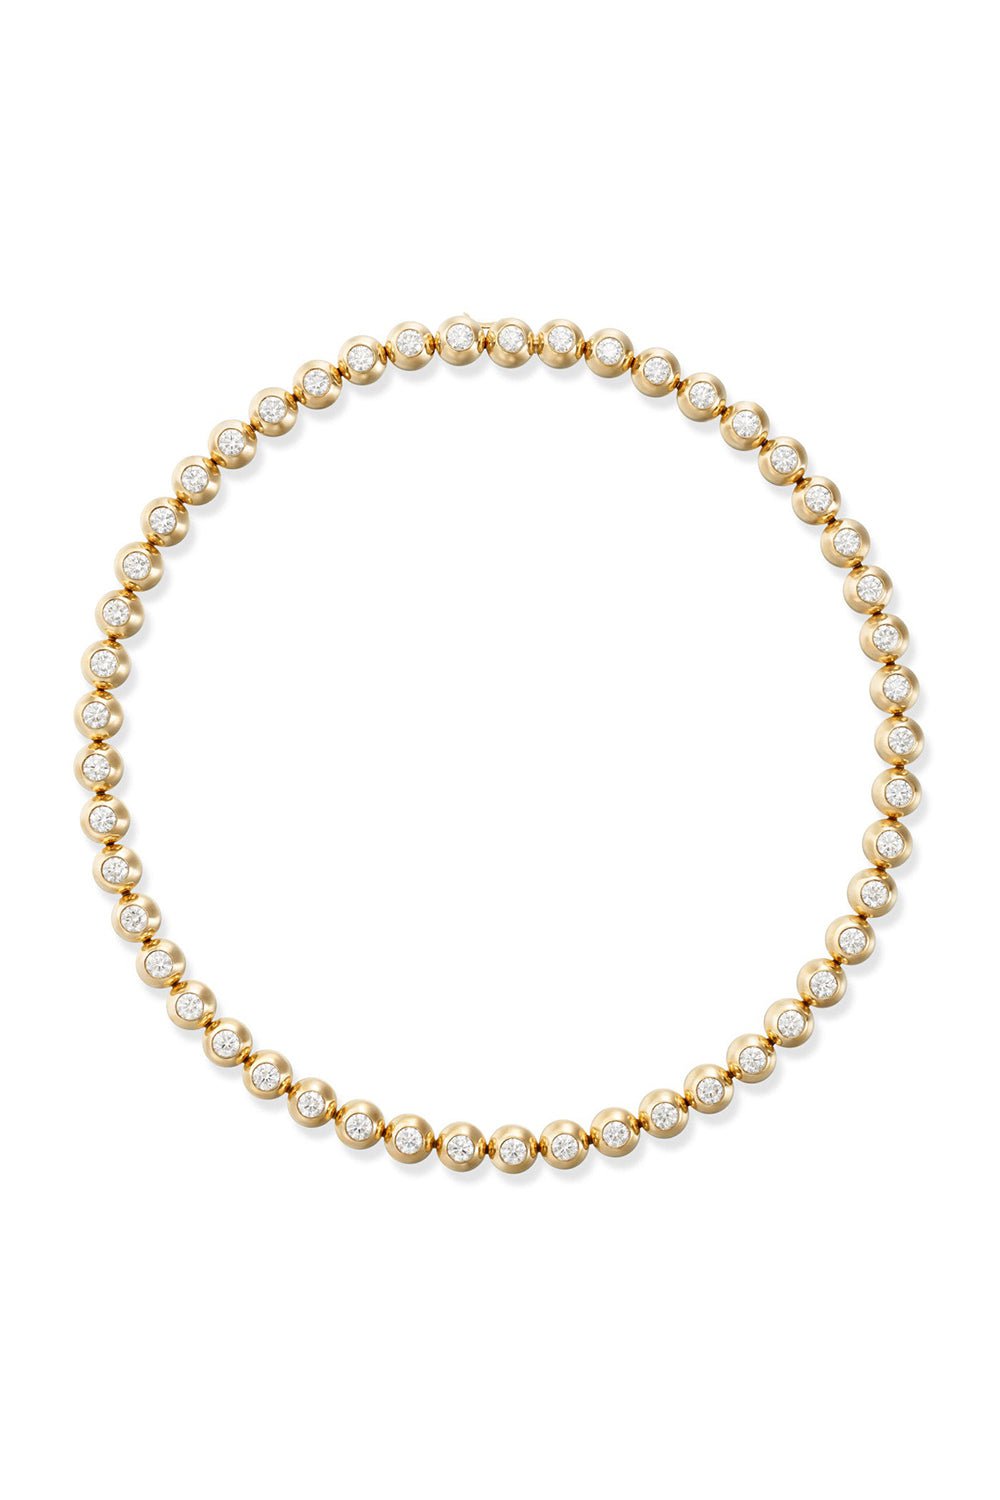 MELISSA KAYE-Large Audrey Tennis Necklace-YELLOW GOLD